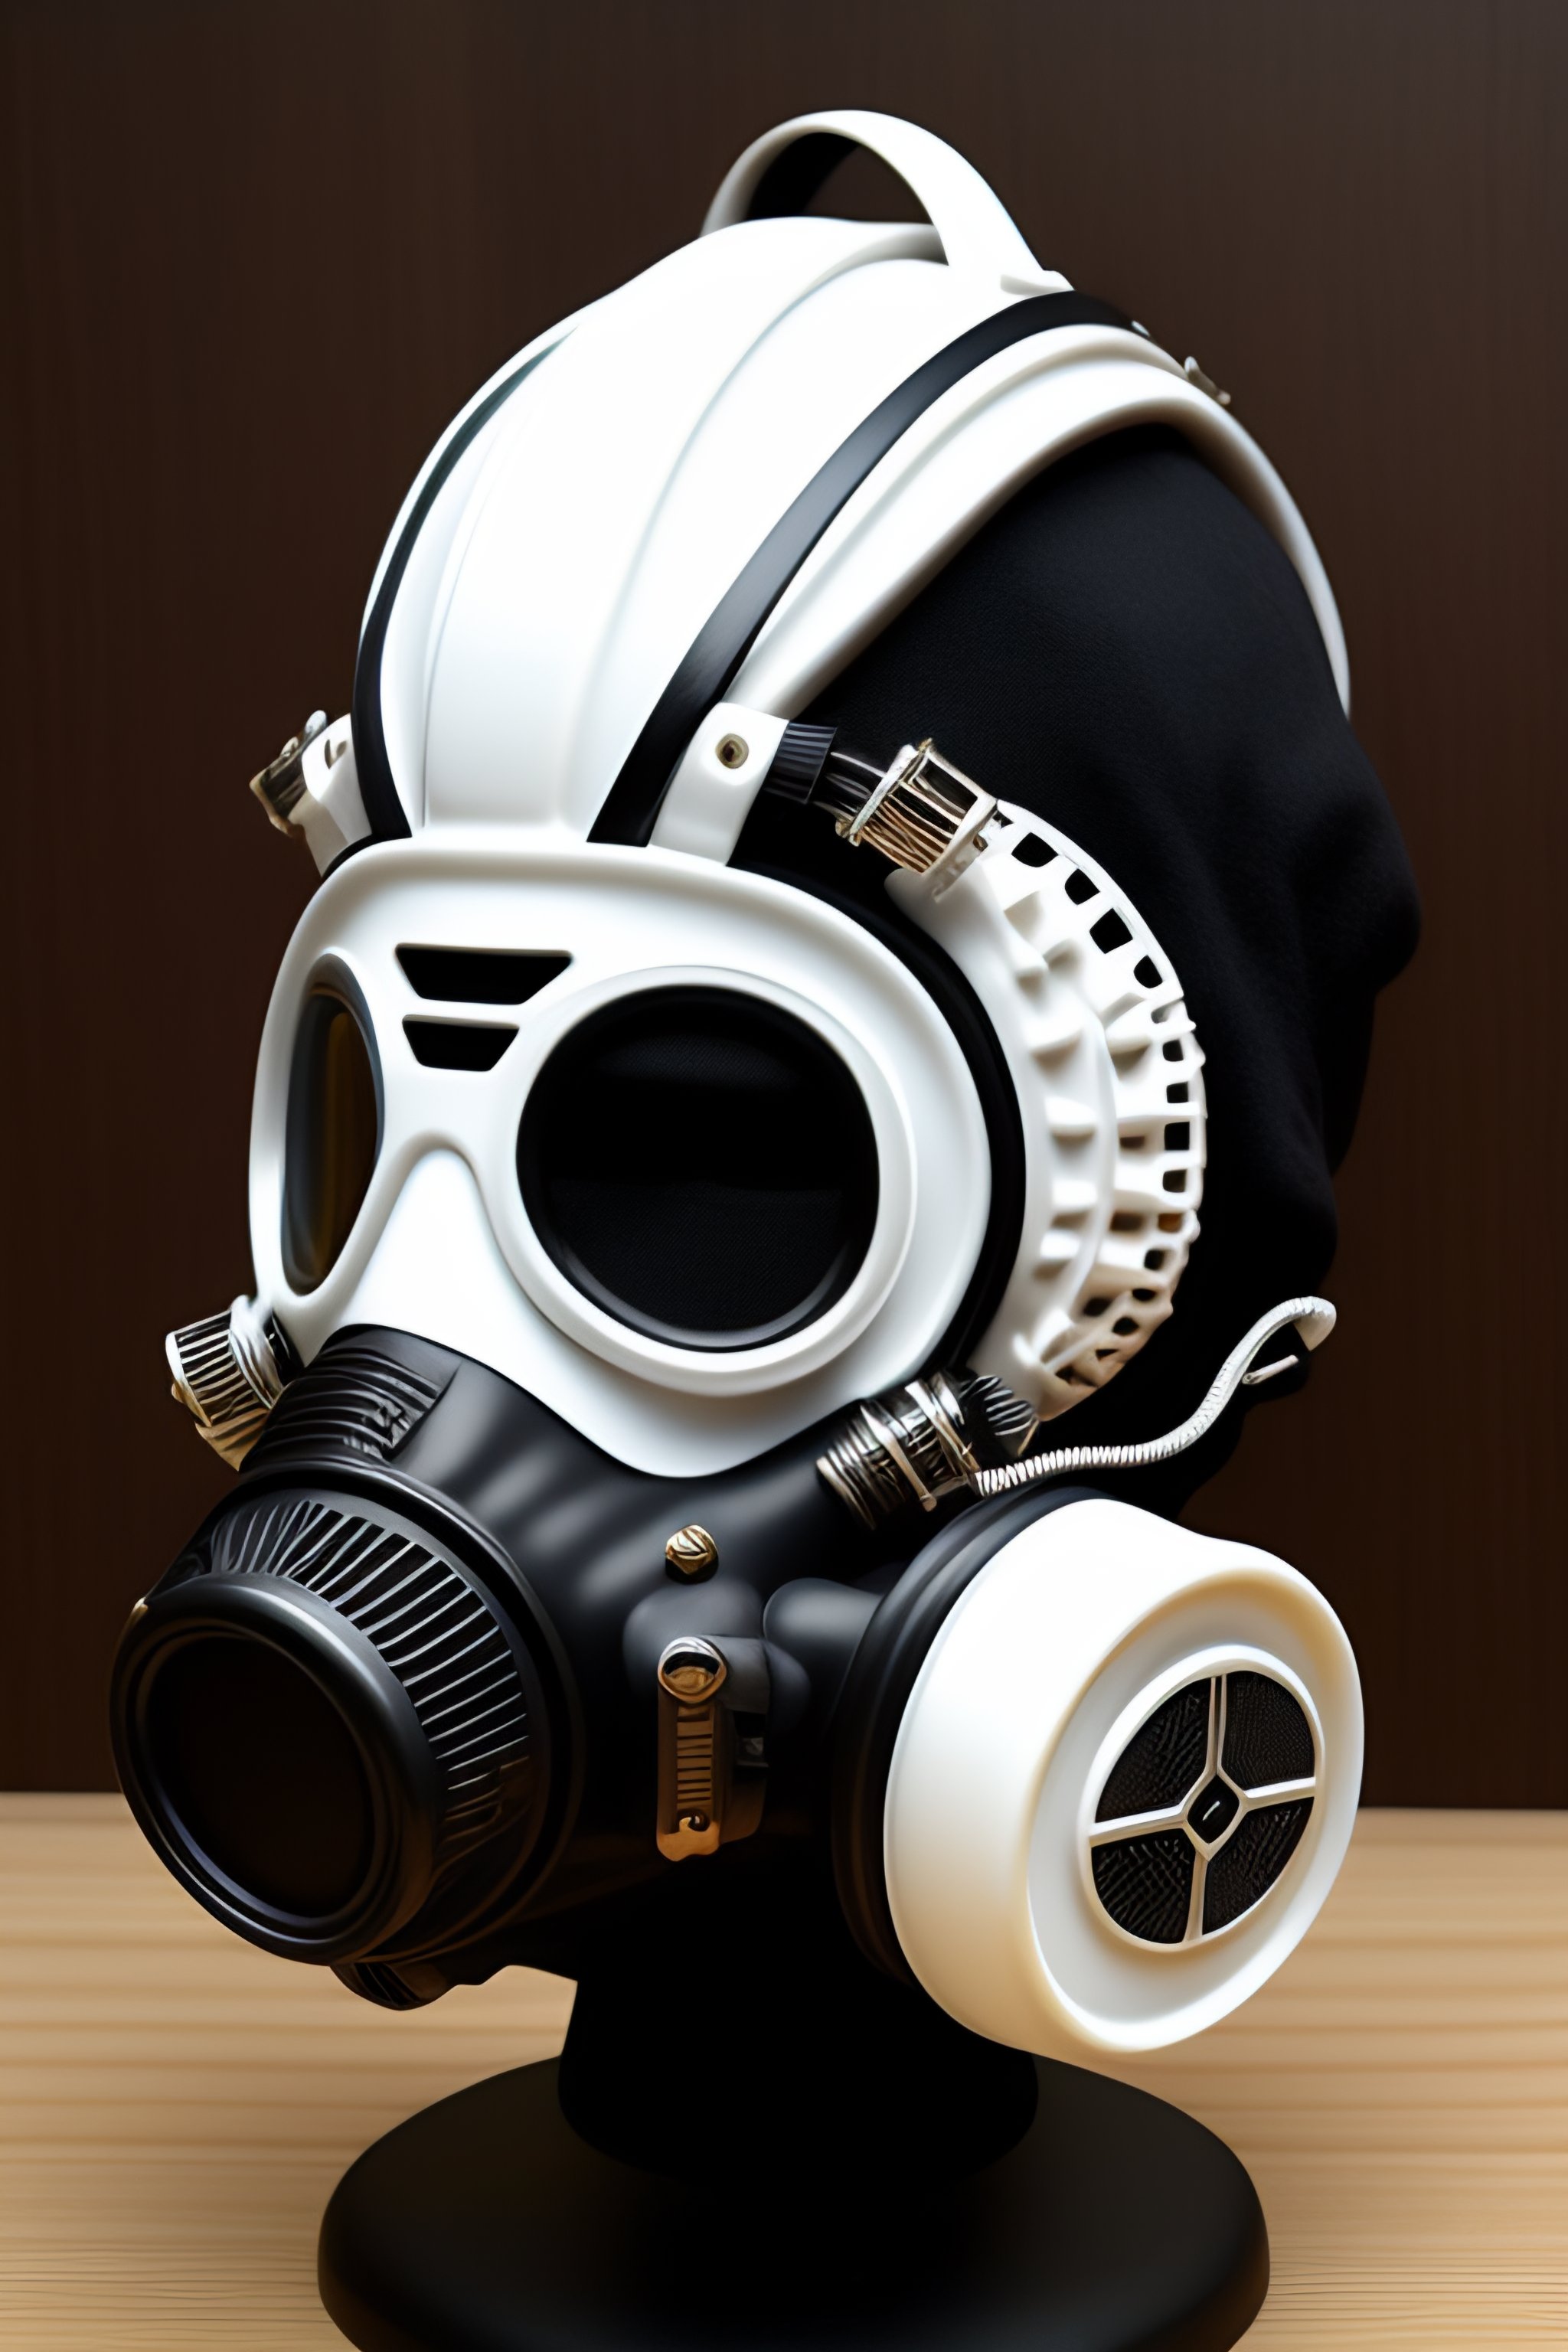 Lexica Oni Cyberpunk Gas Mask White And Black Intricate Details Gaudi 6887